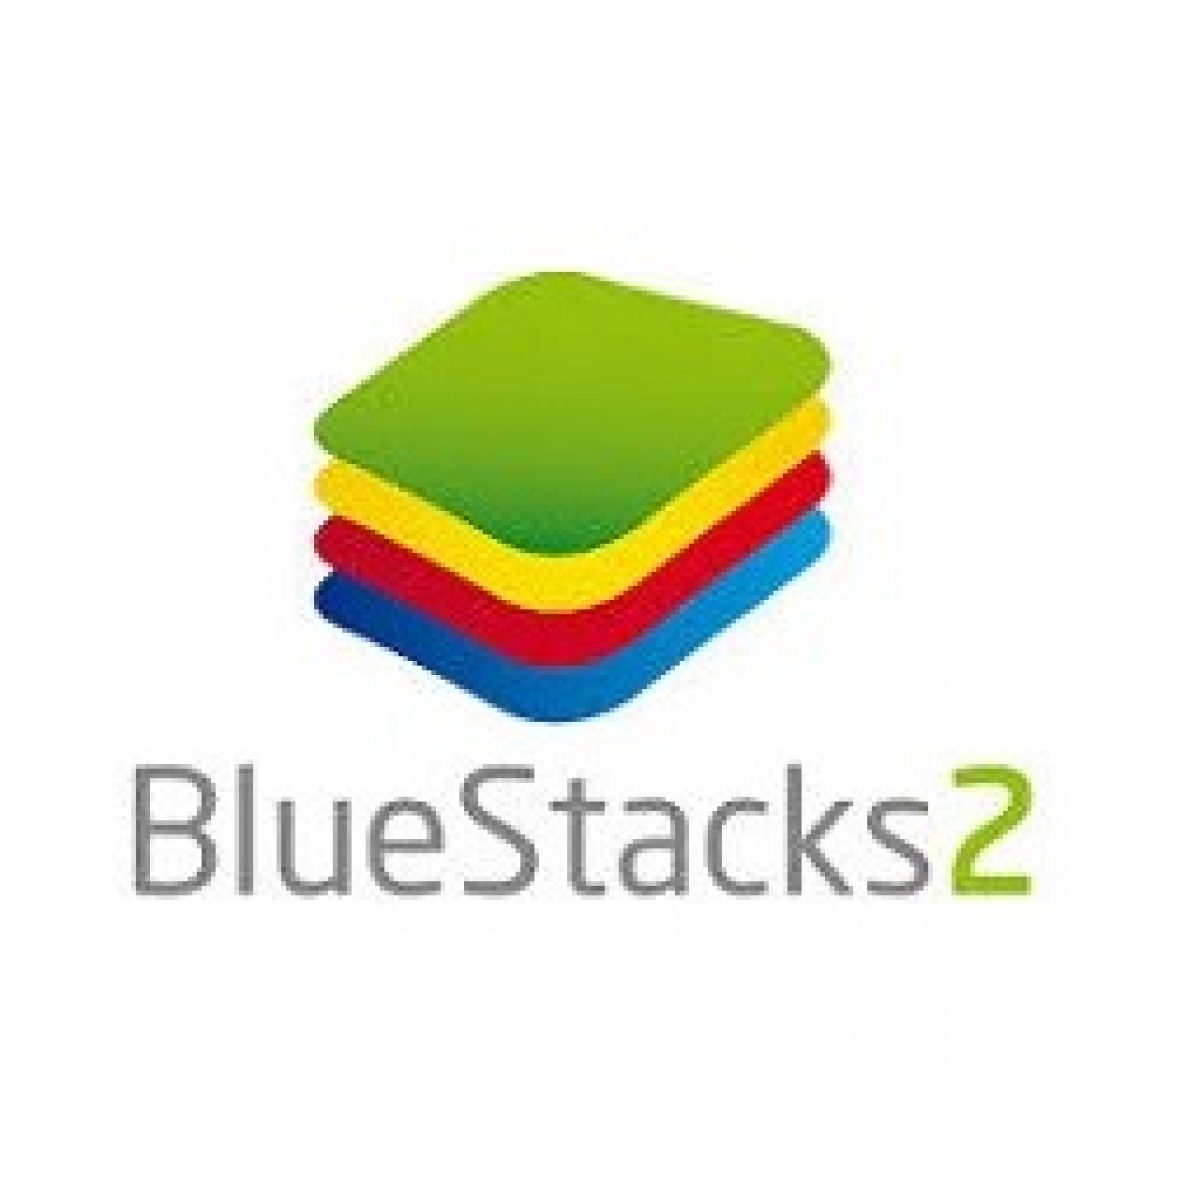 is bluestacks 2 emulator for mac